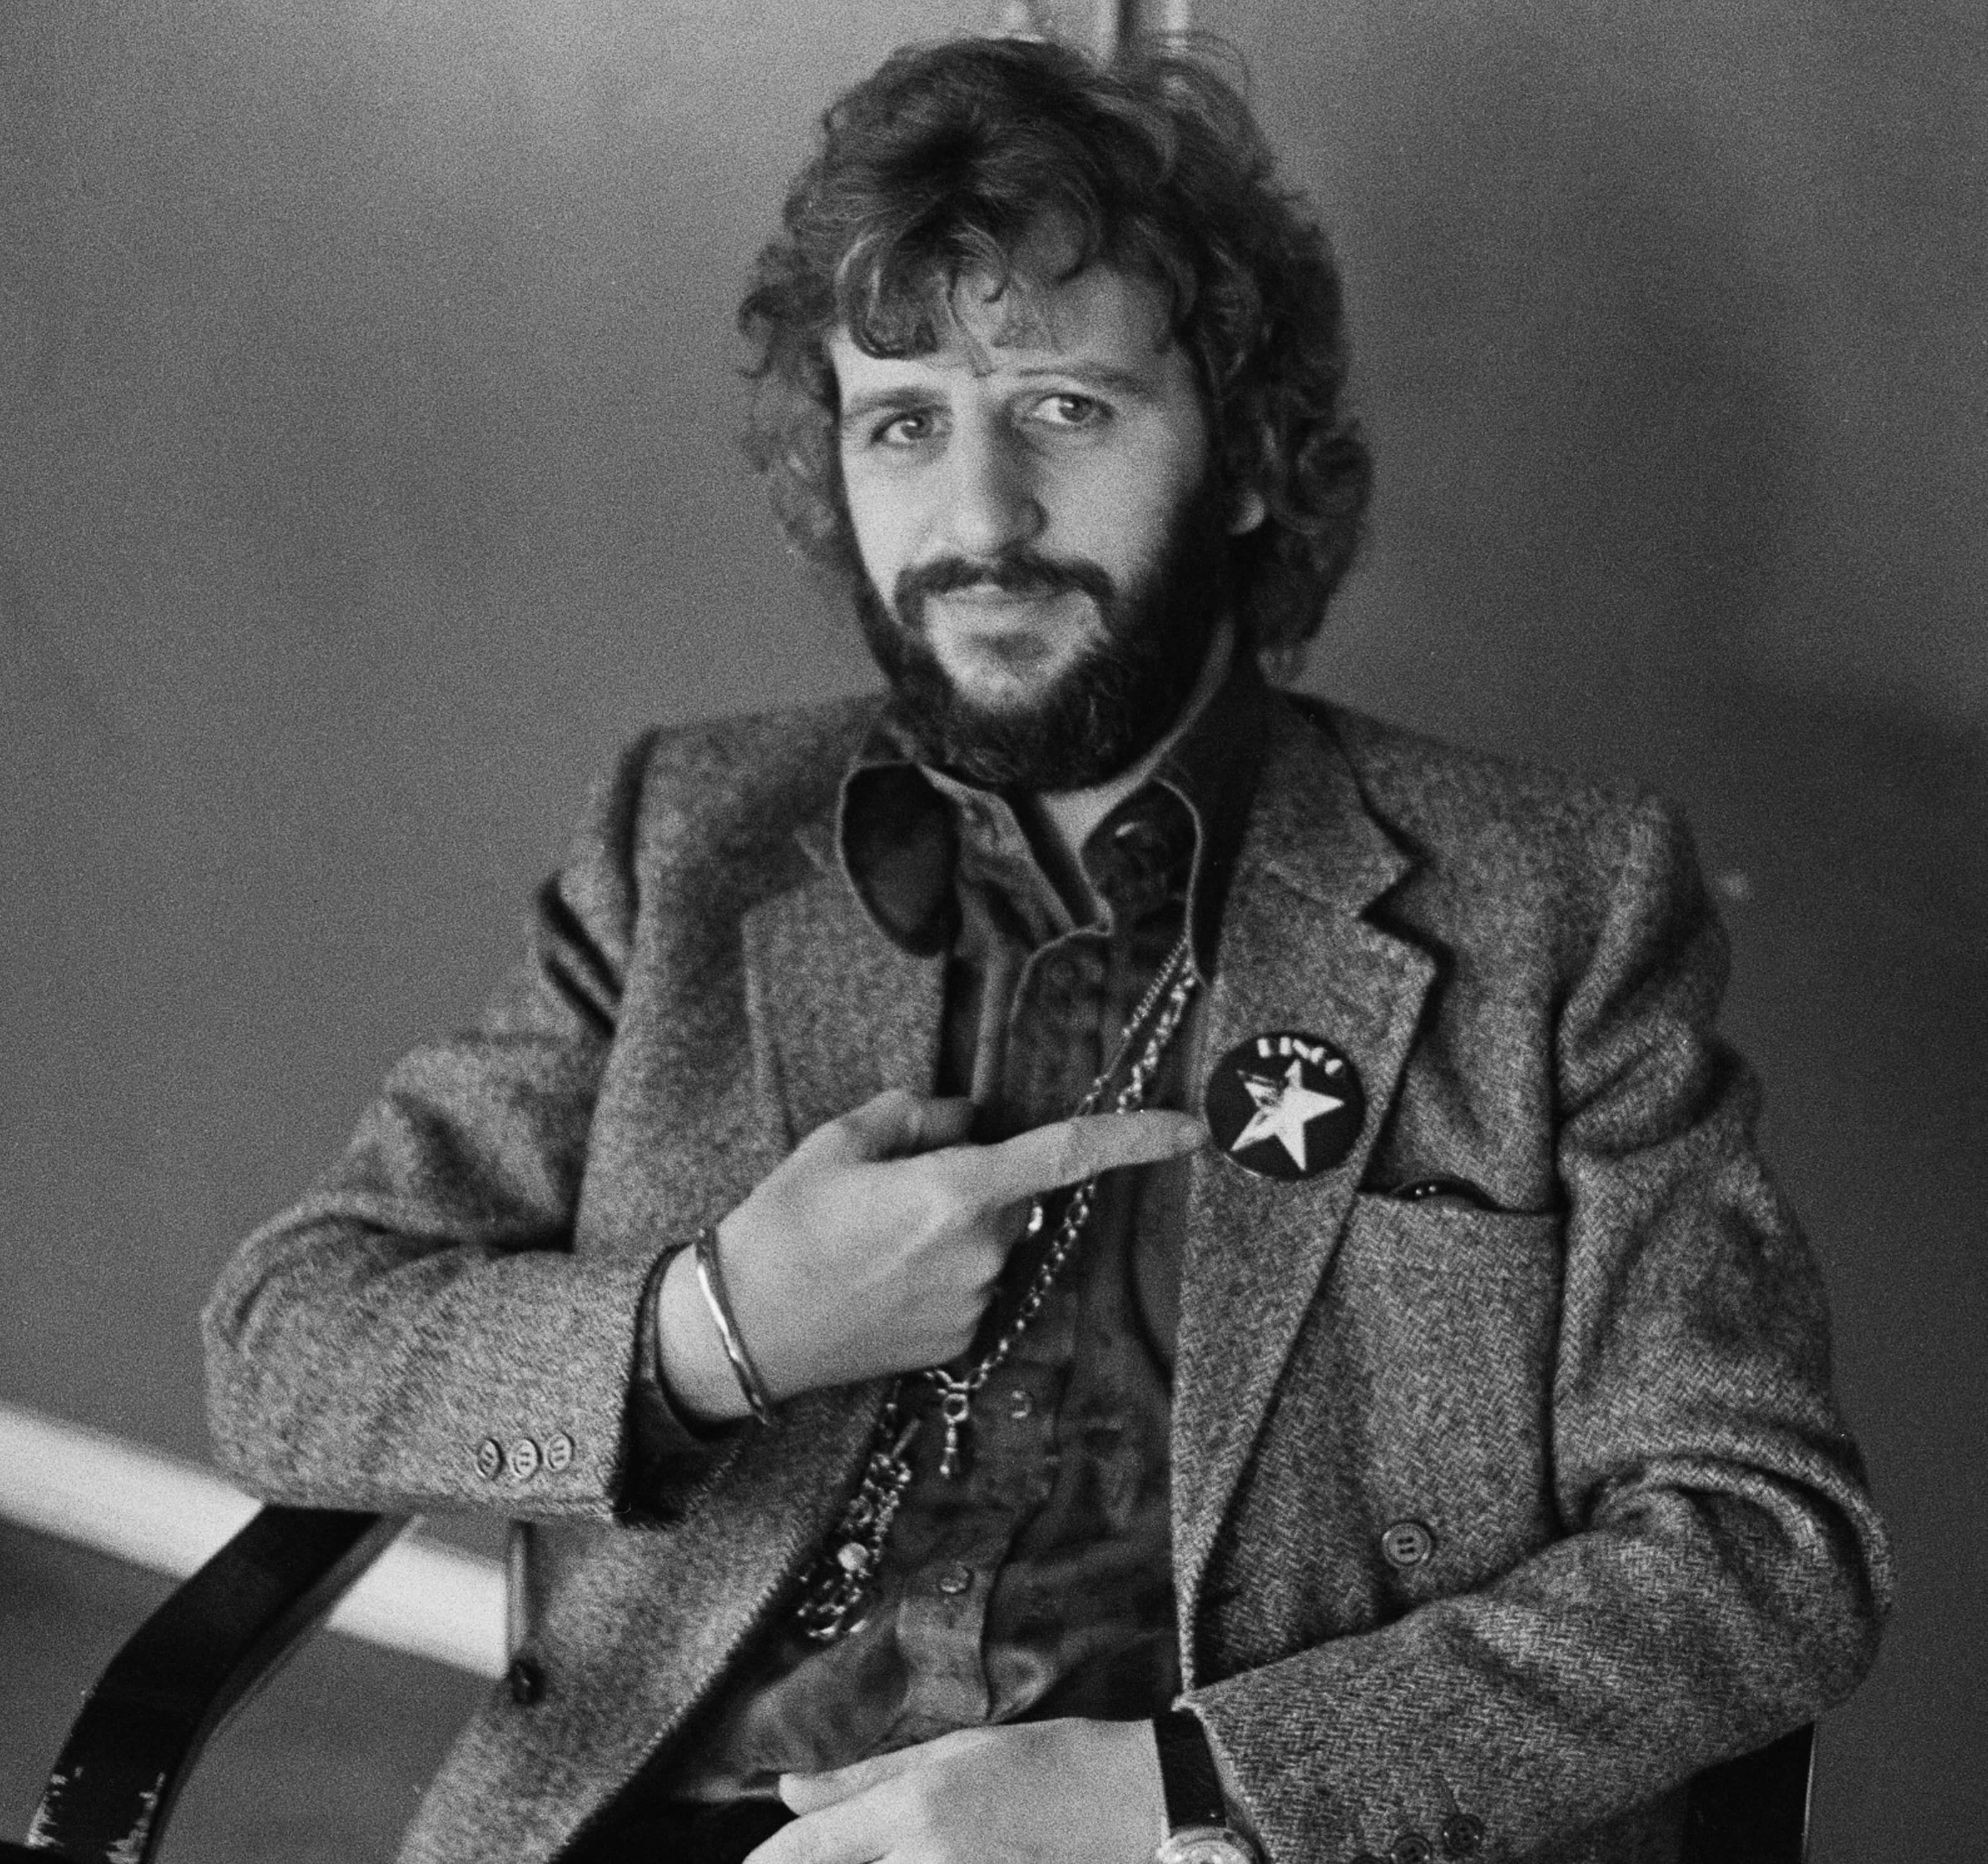 "Back Off Boogaloo" singer Ringo Starr wearing a jacket